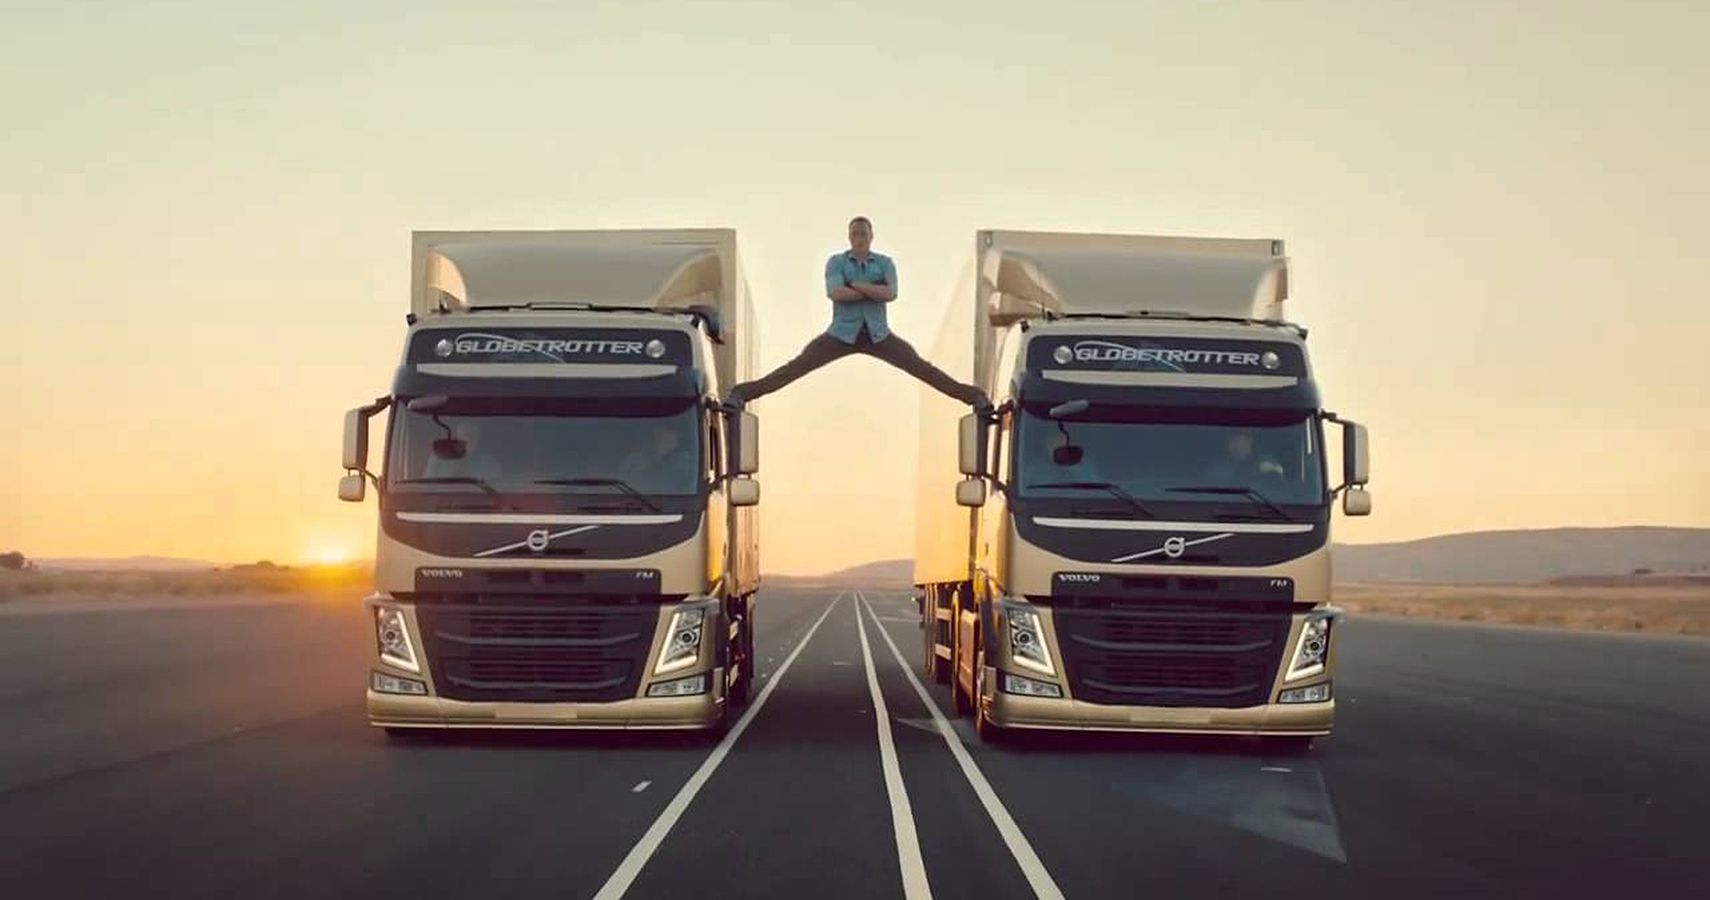 Jean-Claude Van Damme Performed His Trademark Split Between Two Moving, Reversing Volvos, His Feet Resting On The Rearview Mirror